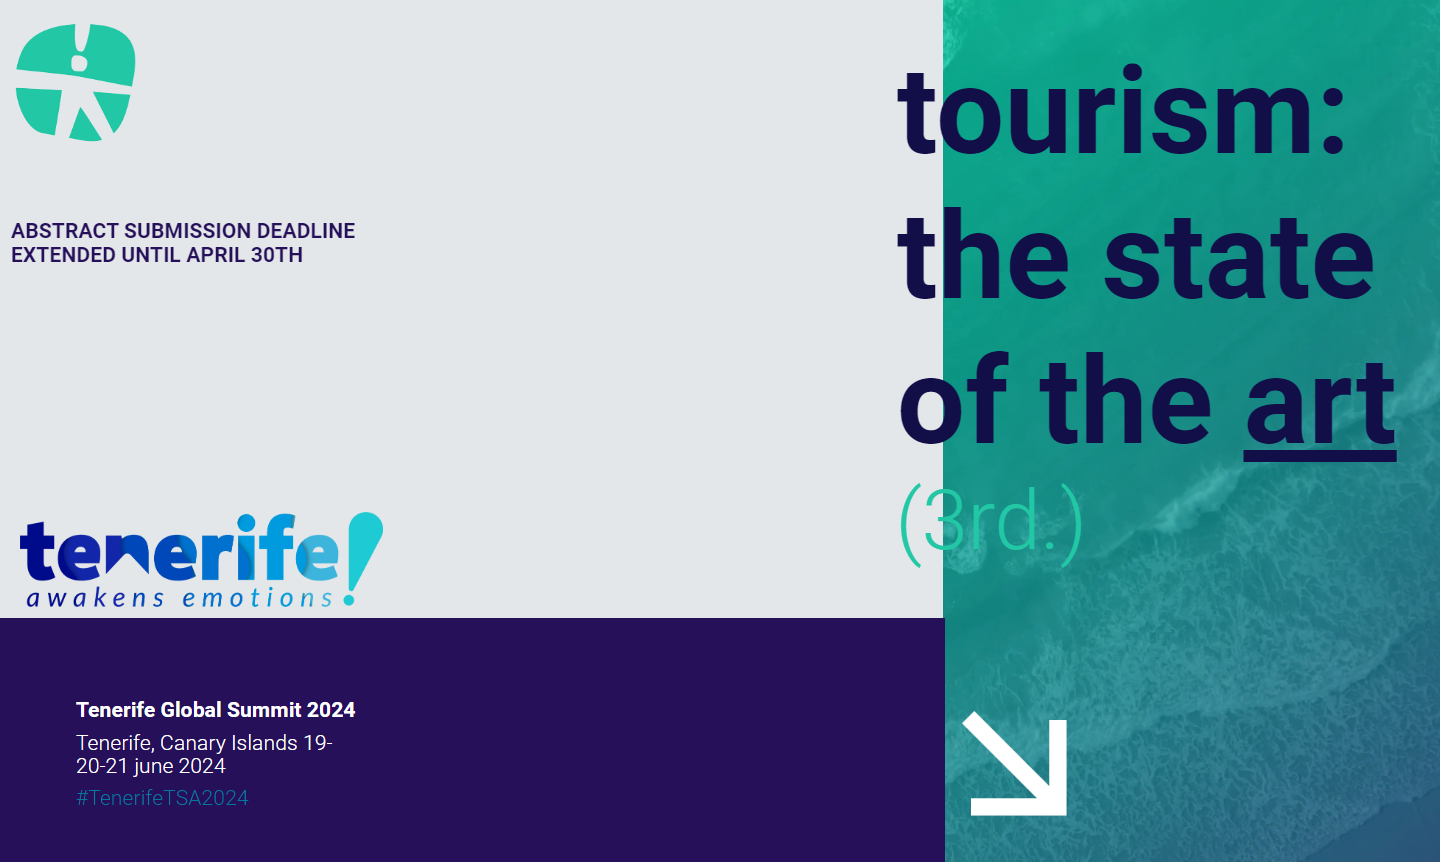 Turismo de Tenerife organiza la Conferencia Internacional Tenerife Global Summit, Tourism: The State of the Art 3rd – 19-21 junio 2024